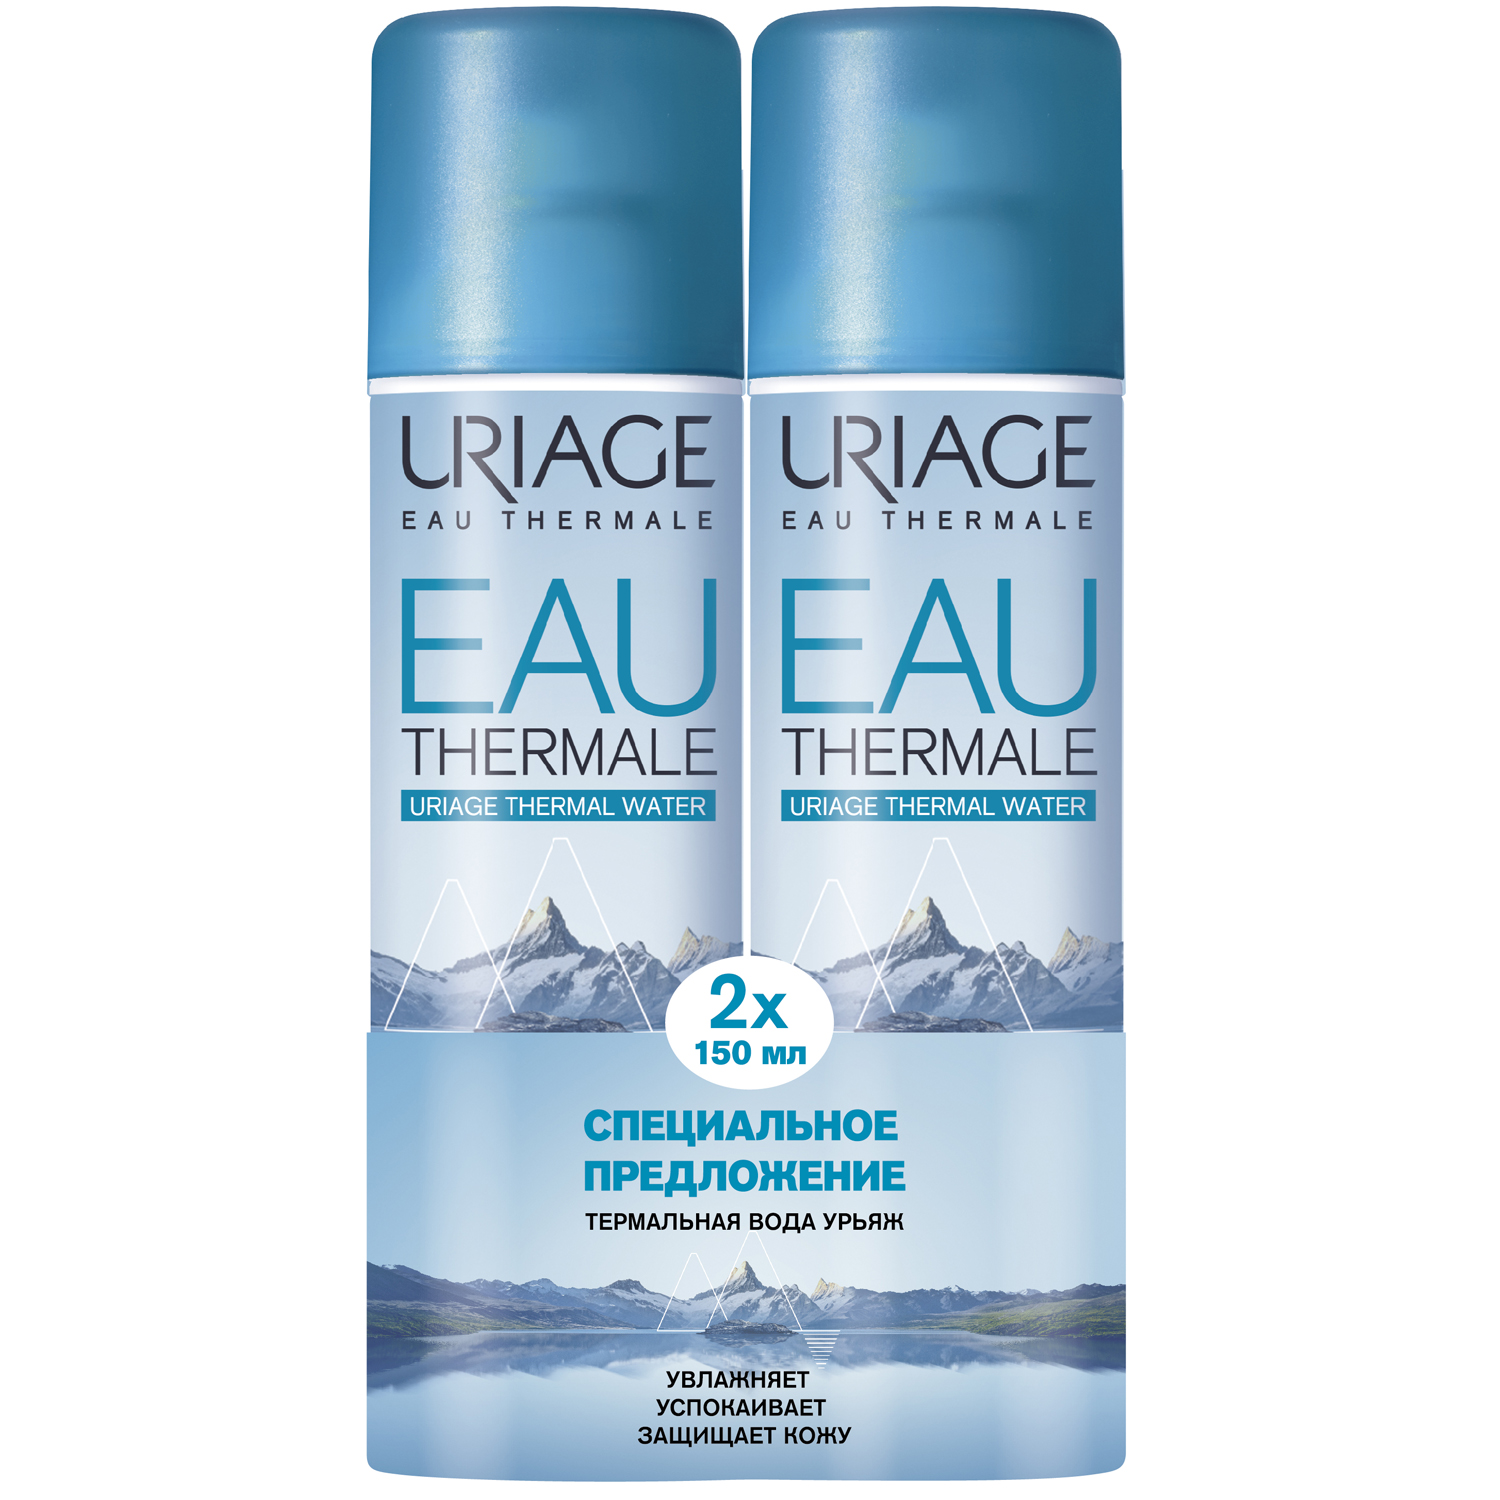 uriage термальная вода урьяж 50 мл uriage eau thermale Uriage Термальная вода Урьяж, 2 х 150 мл (Uriage, Eau thermale)